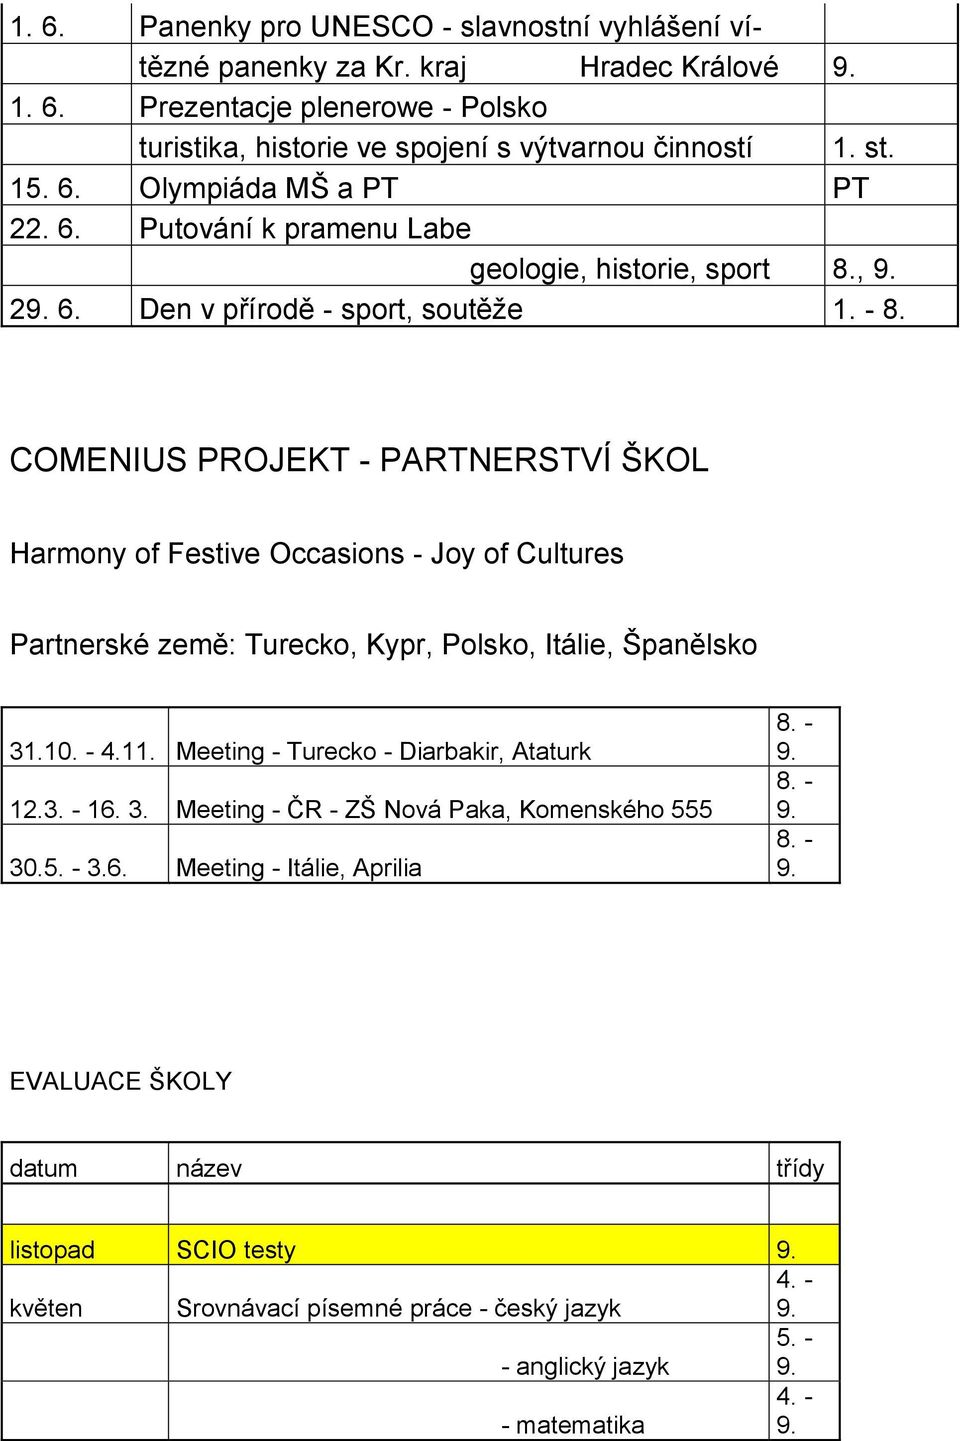 COMENIUS PROJEKT - PARTNERSTVÍ ŠKOL Harmony of Festive Occasions - Joy of Cultures Partnerské země: Turecko, Kypr, Polsko, Itálie, Španělsko 31.10. - 4.11. Meeting - Turecko - Diarbakir, Ataturk 12.3. - 16.